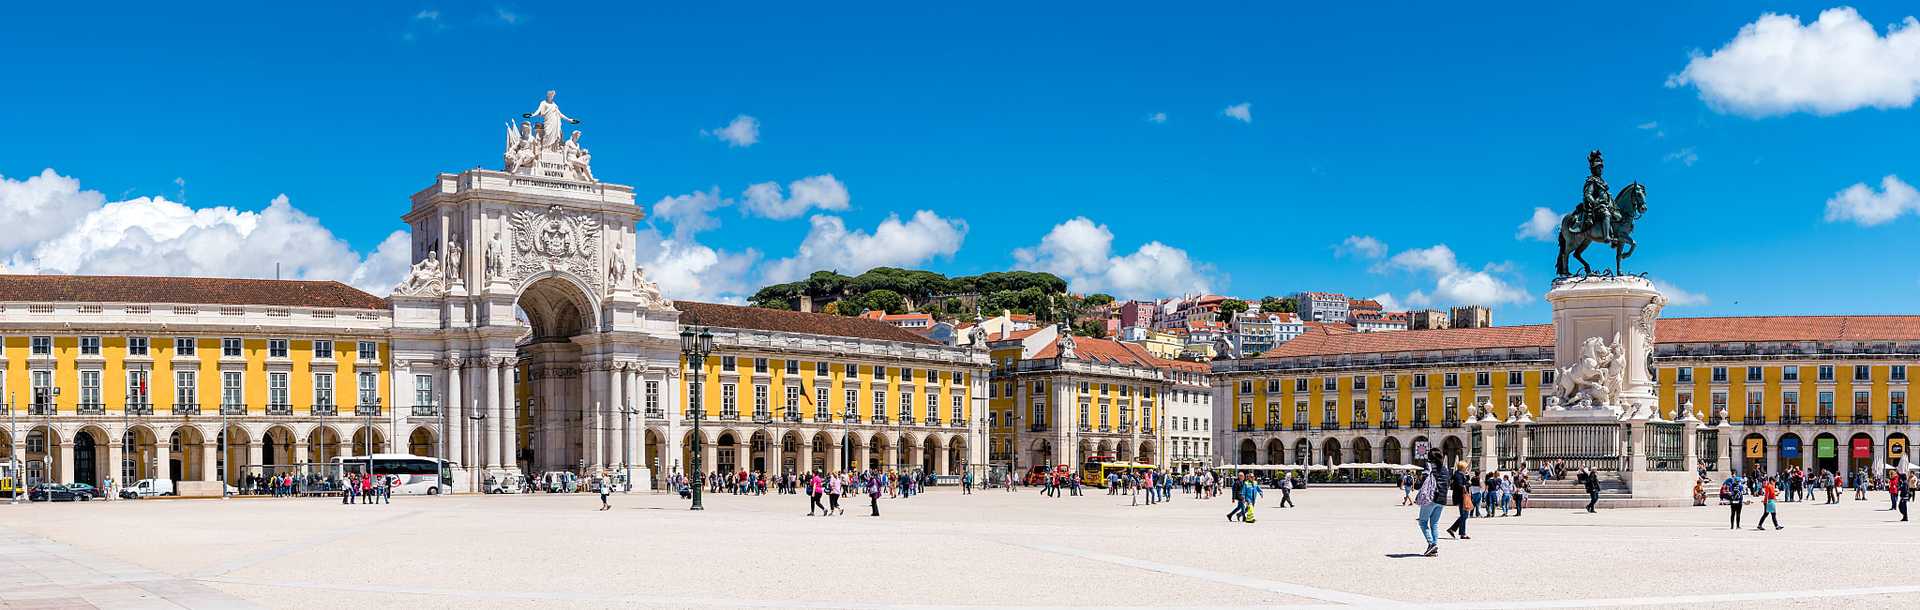 The famous arch in Lisbon's Praca Do Comercio in Lisbon, Portugal